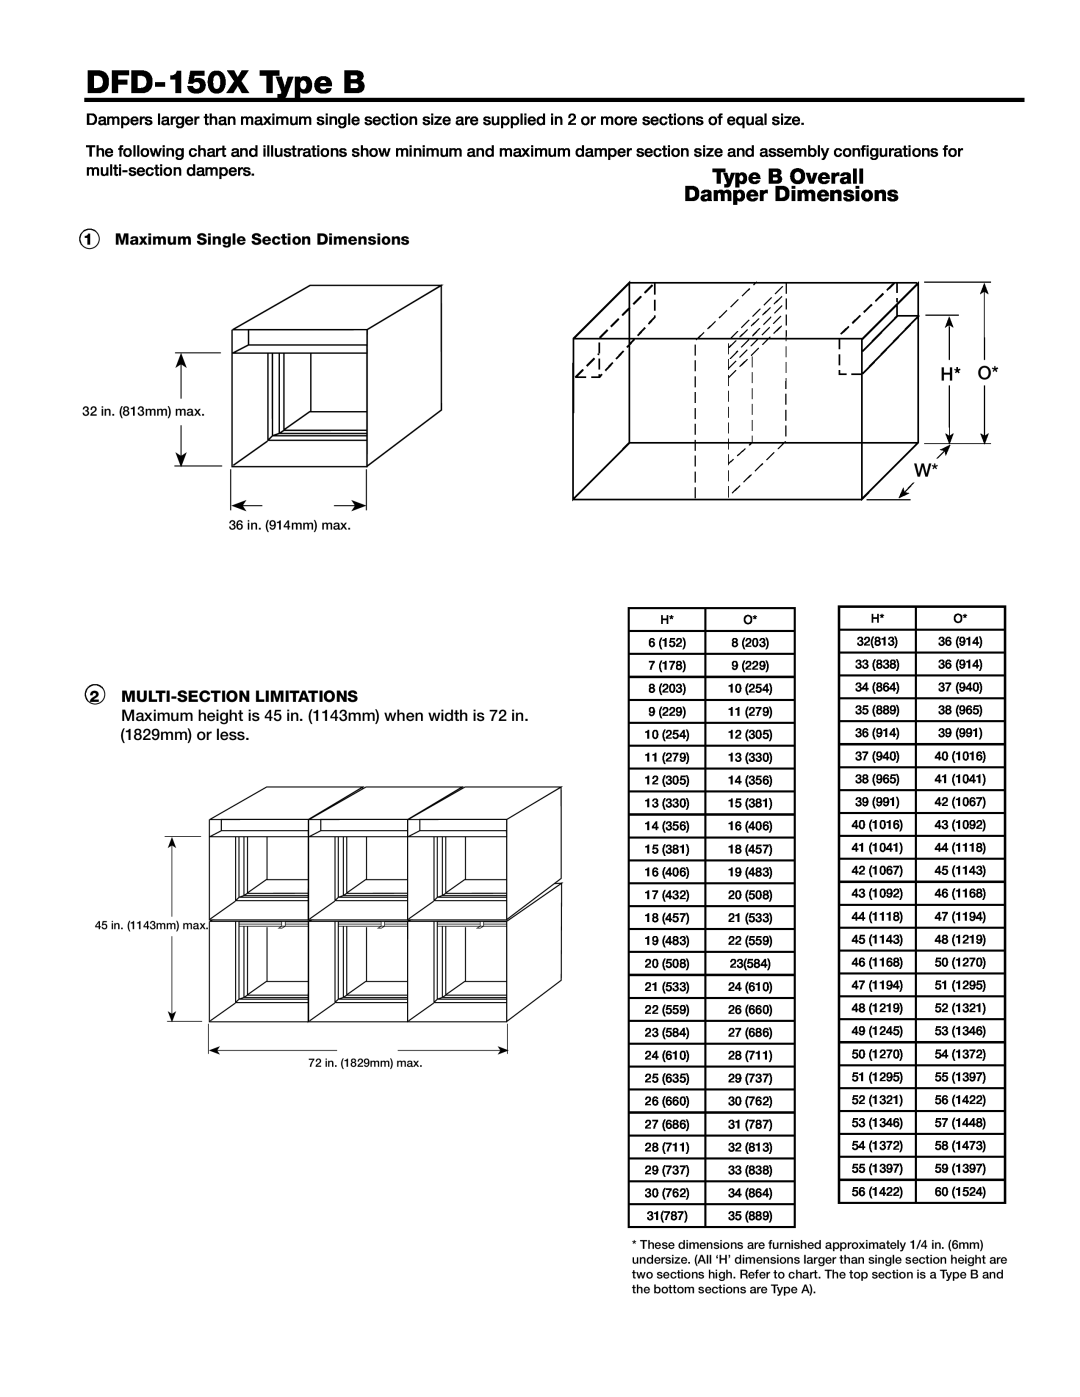 Greenheck Fan DFD-150X series DFD-150X Type B, H* O W, Maximum Single Section Dimensions, Multi-section limitations 